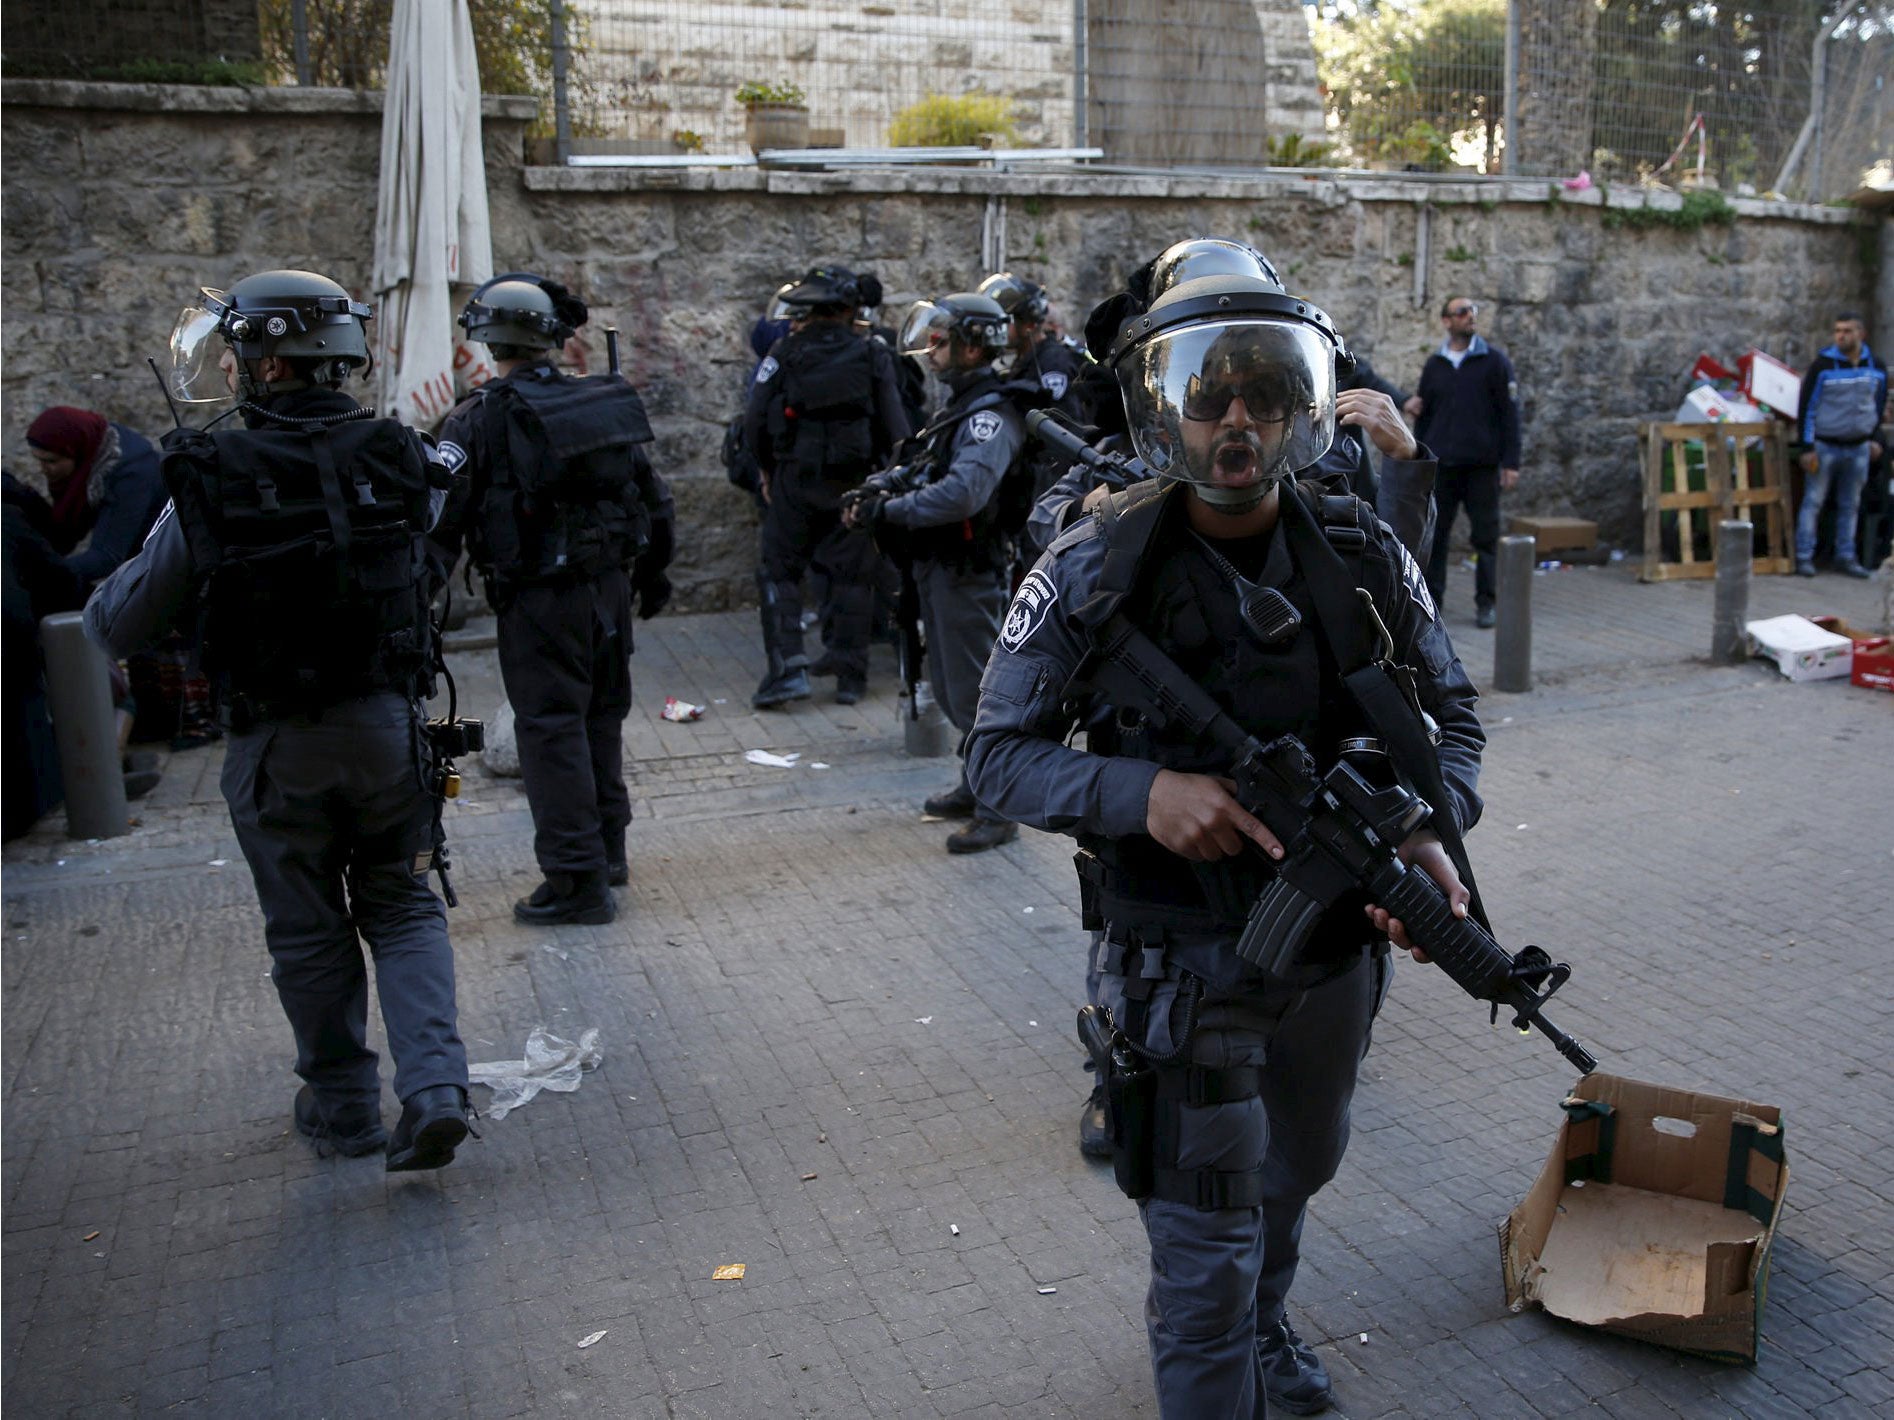 Israeli police secure an area near the scene where three Palestinians were shot dead by Israeli police